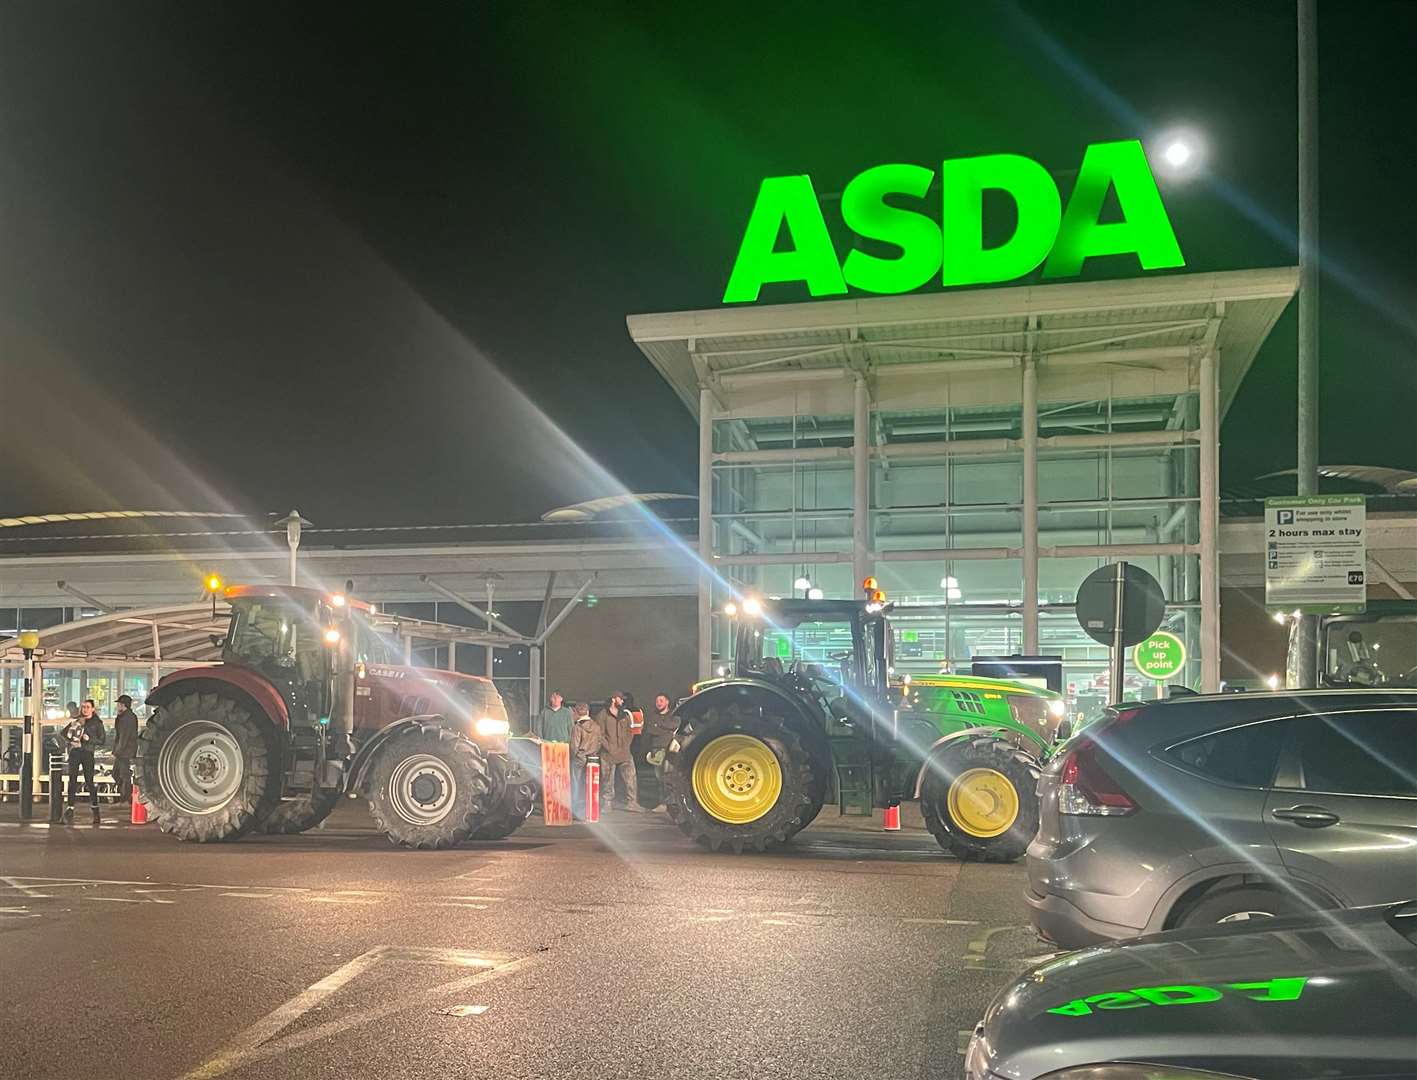 Farmers have taken over the car park at Asda in Ashford